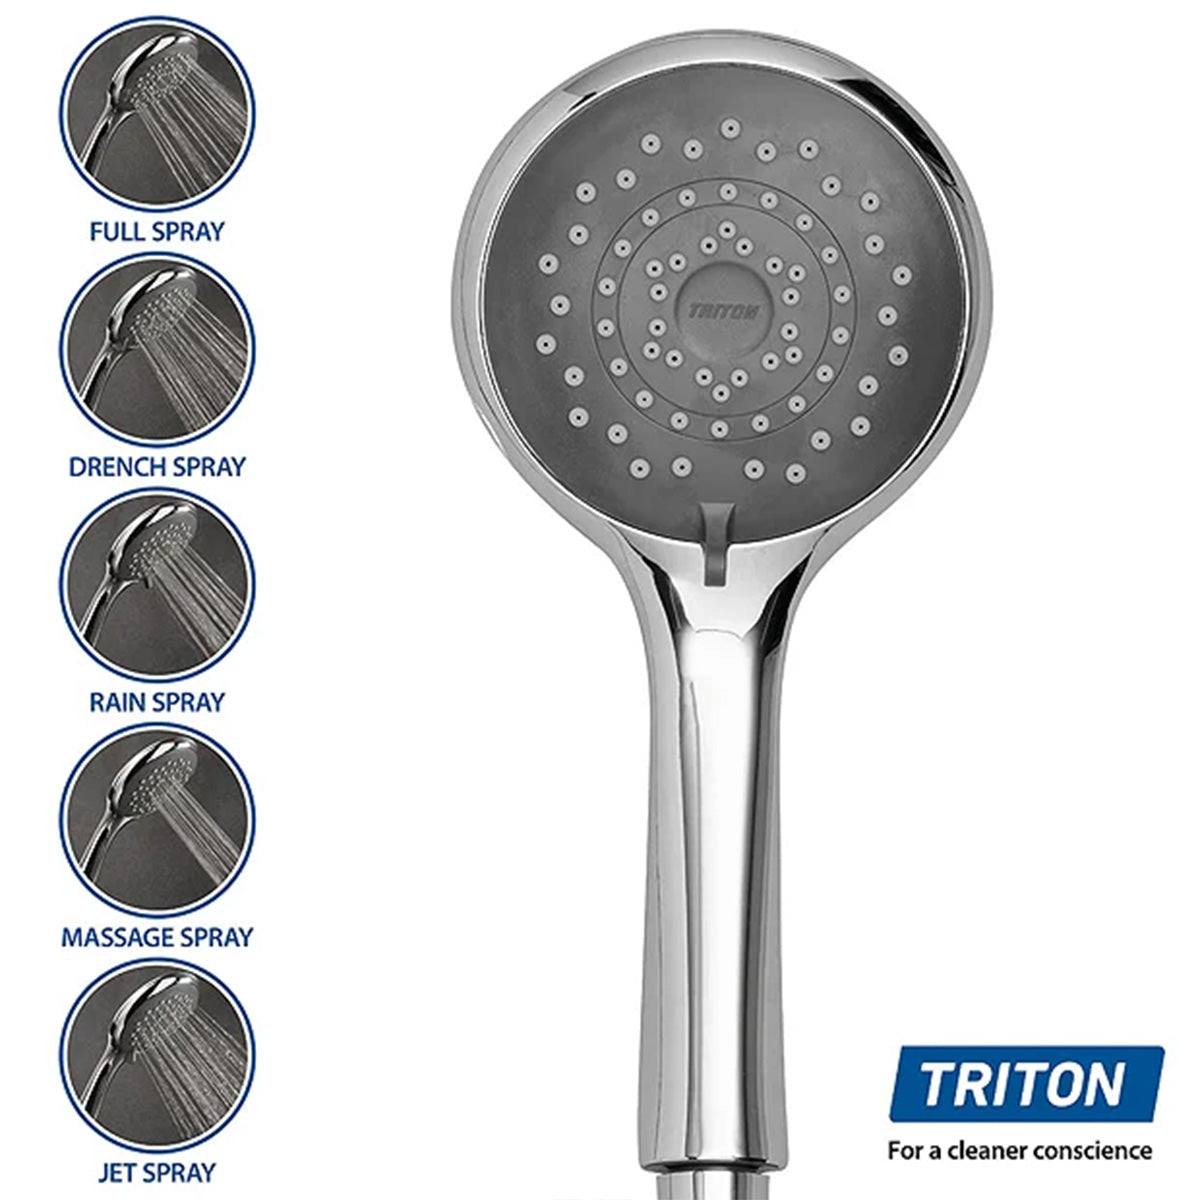 triton danzi electric shower duelec shower handheld spray patterns